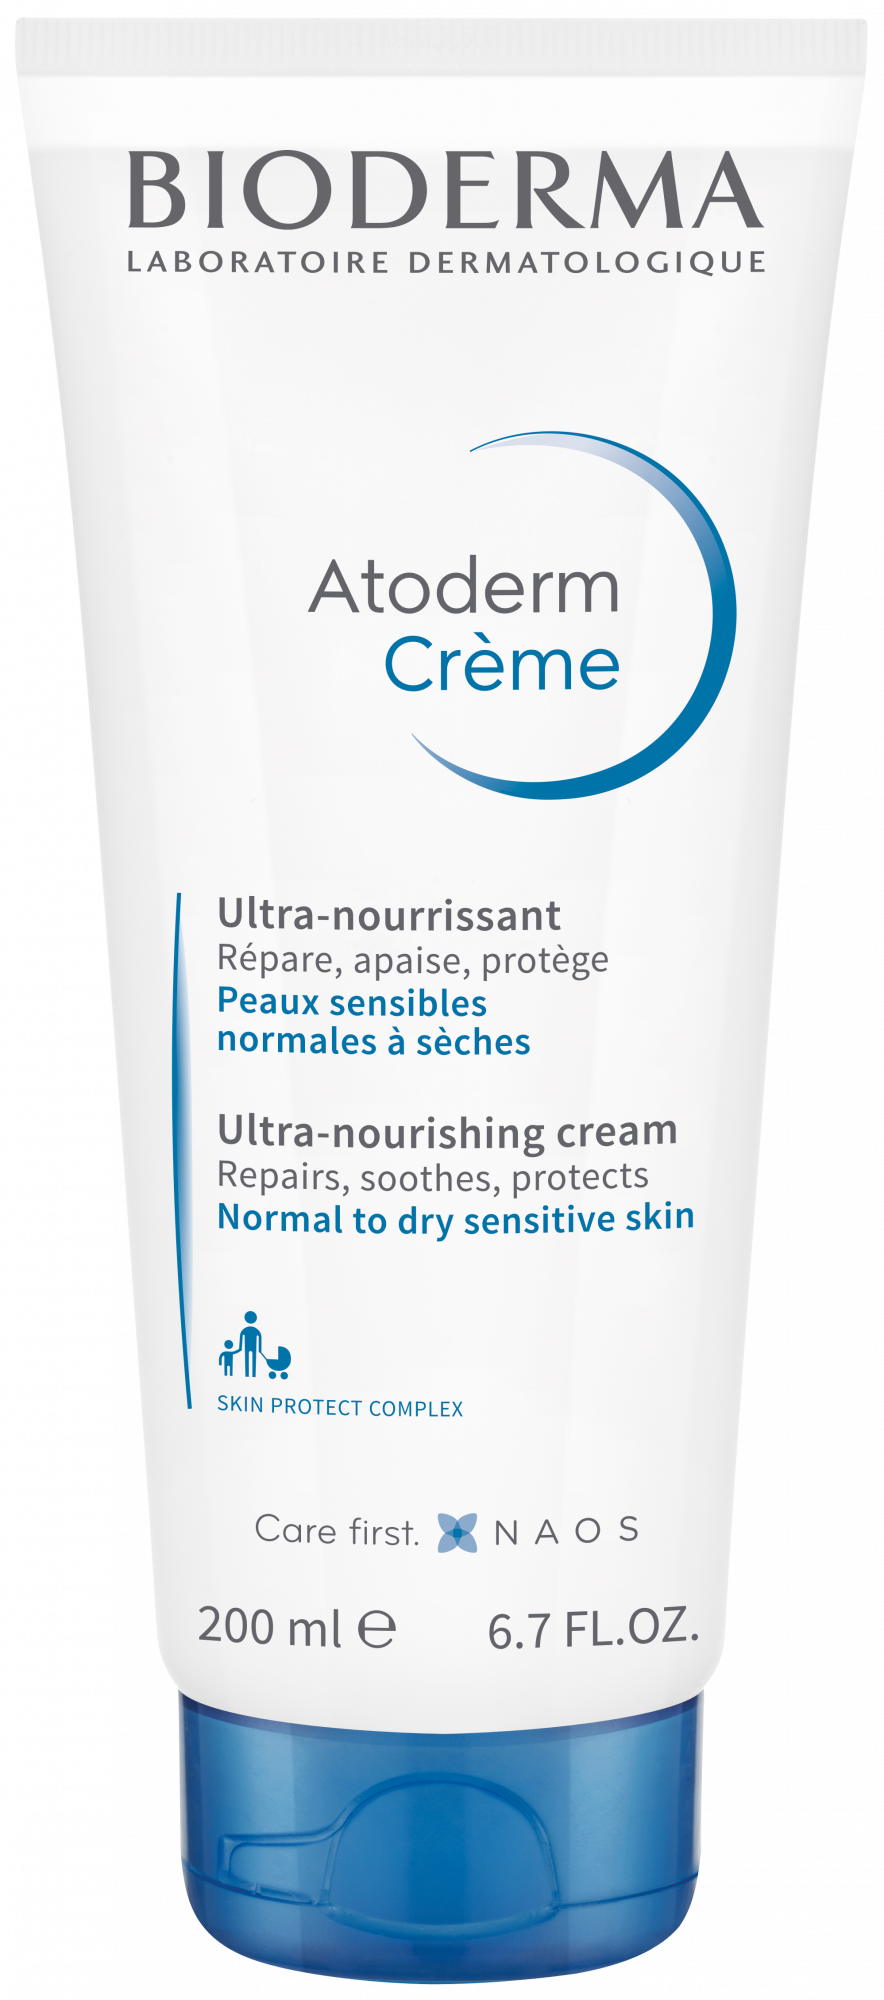 Buy  Bioderma Atoderm Cream - 200ml - at Best Price Online in Pakistan